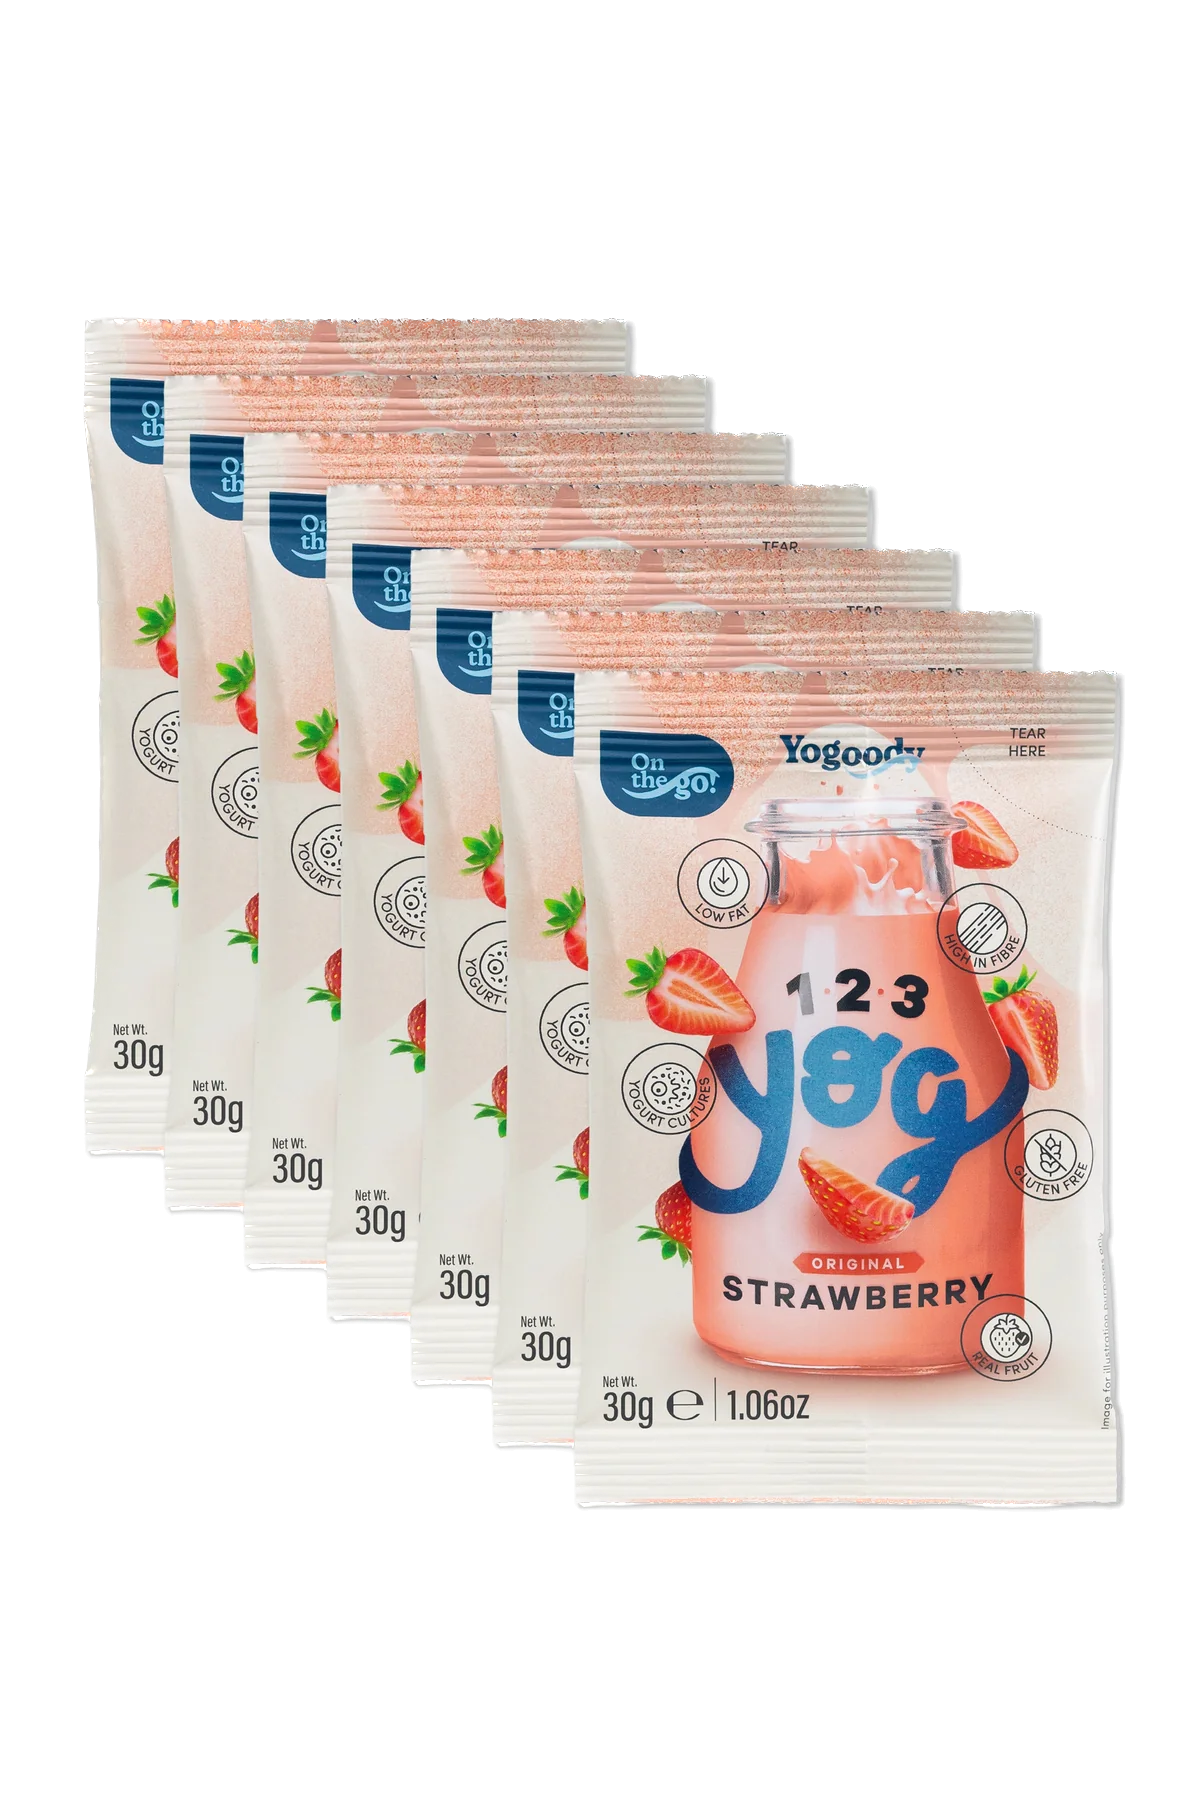 1.2.3. YOG Original Strawberry Flavoured Shake - 7 x 30g sachets